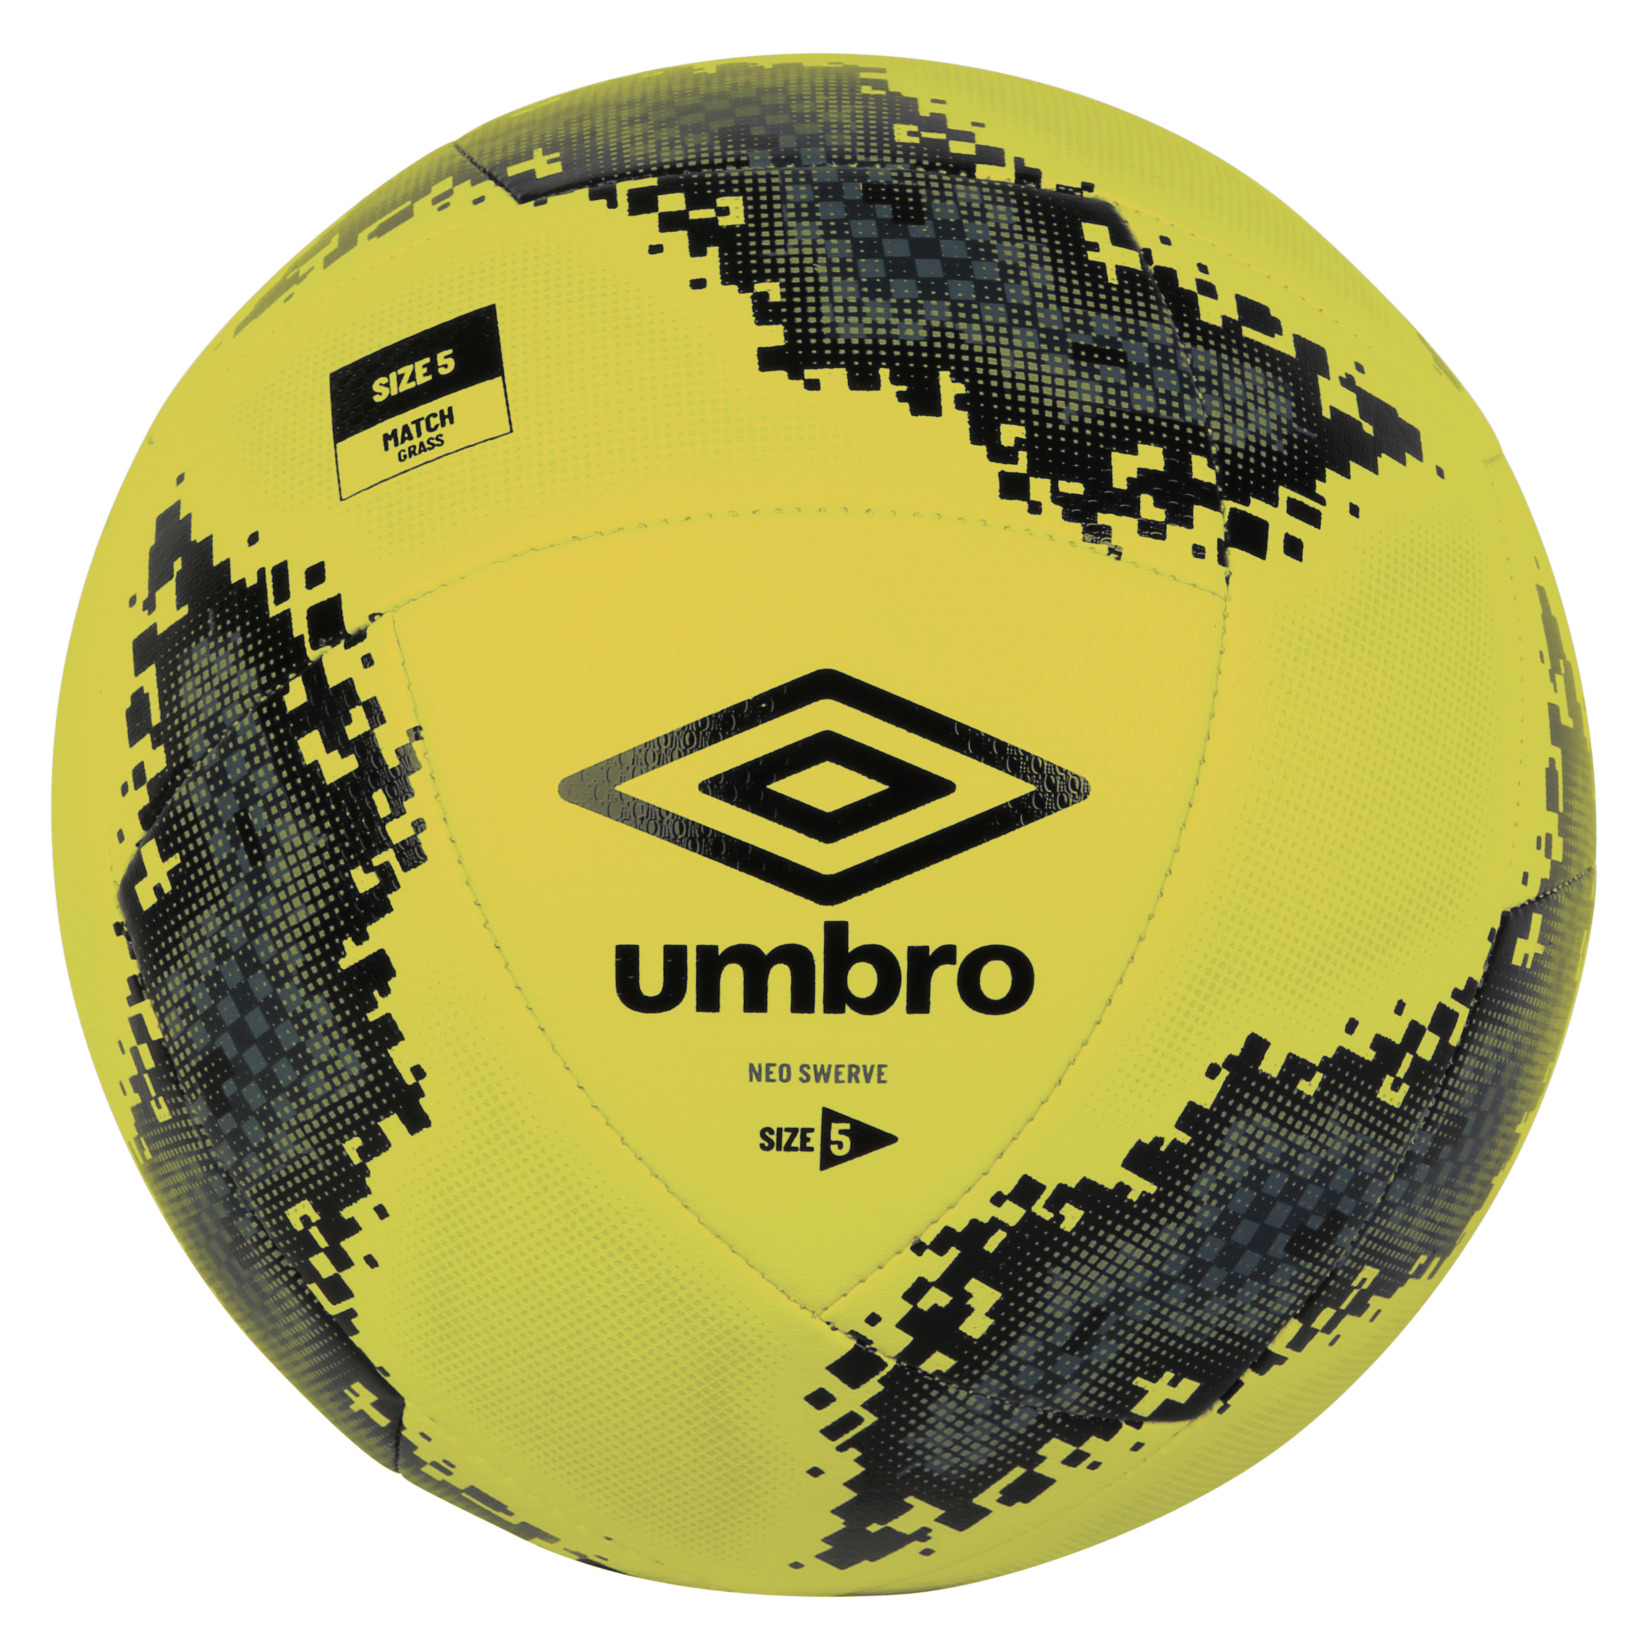 Umbro Neo Swerve FIFA Football Yellow-Black-Carbon